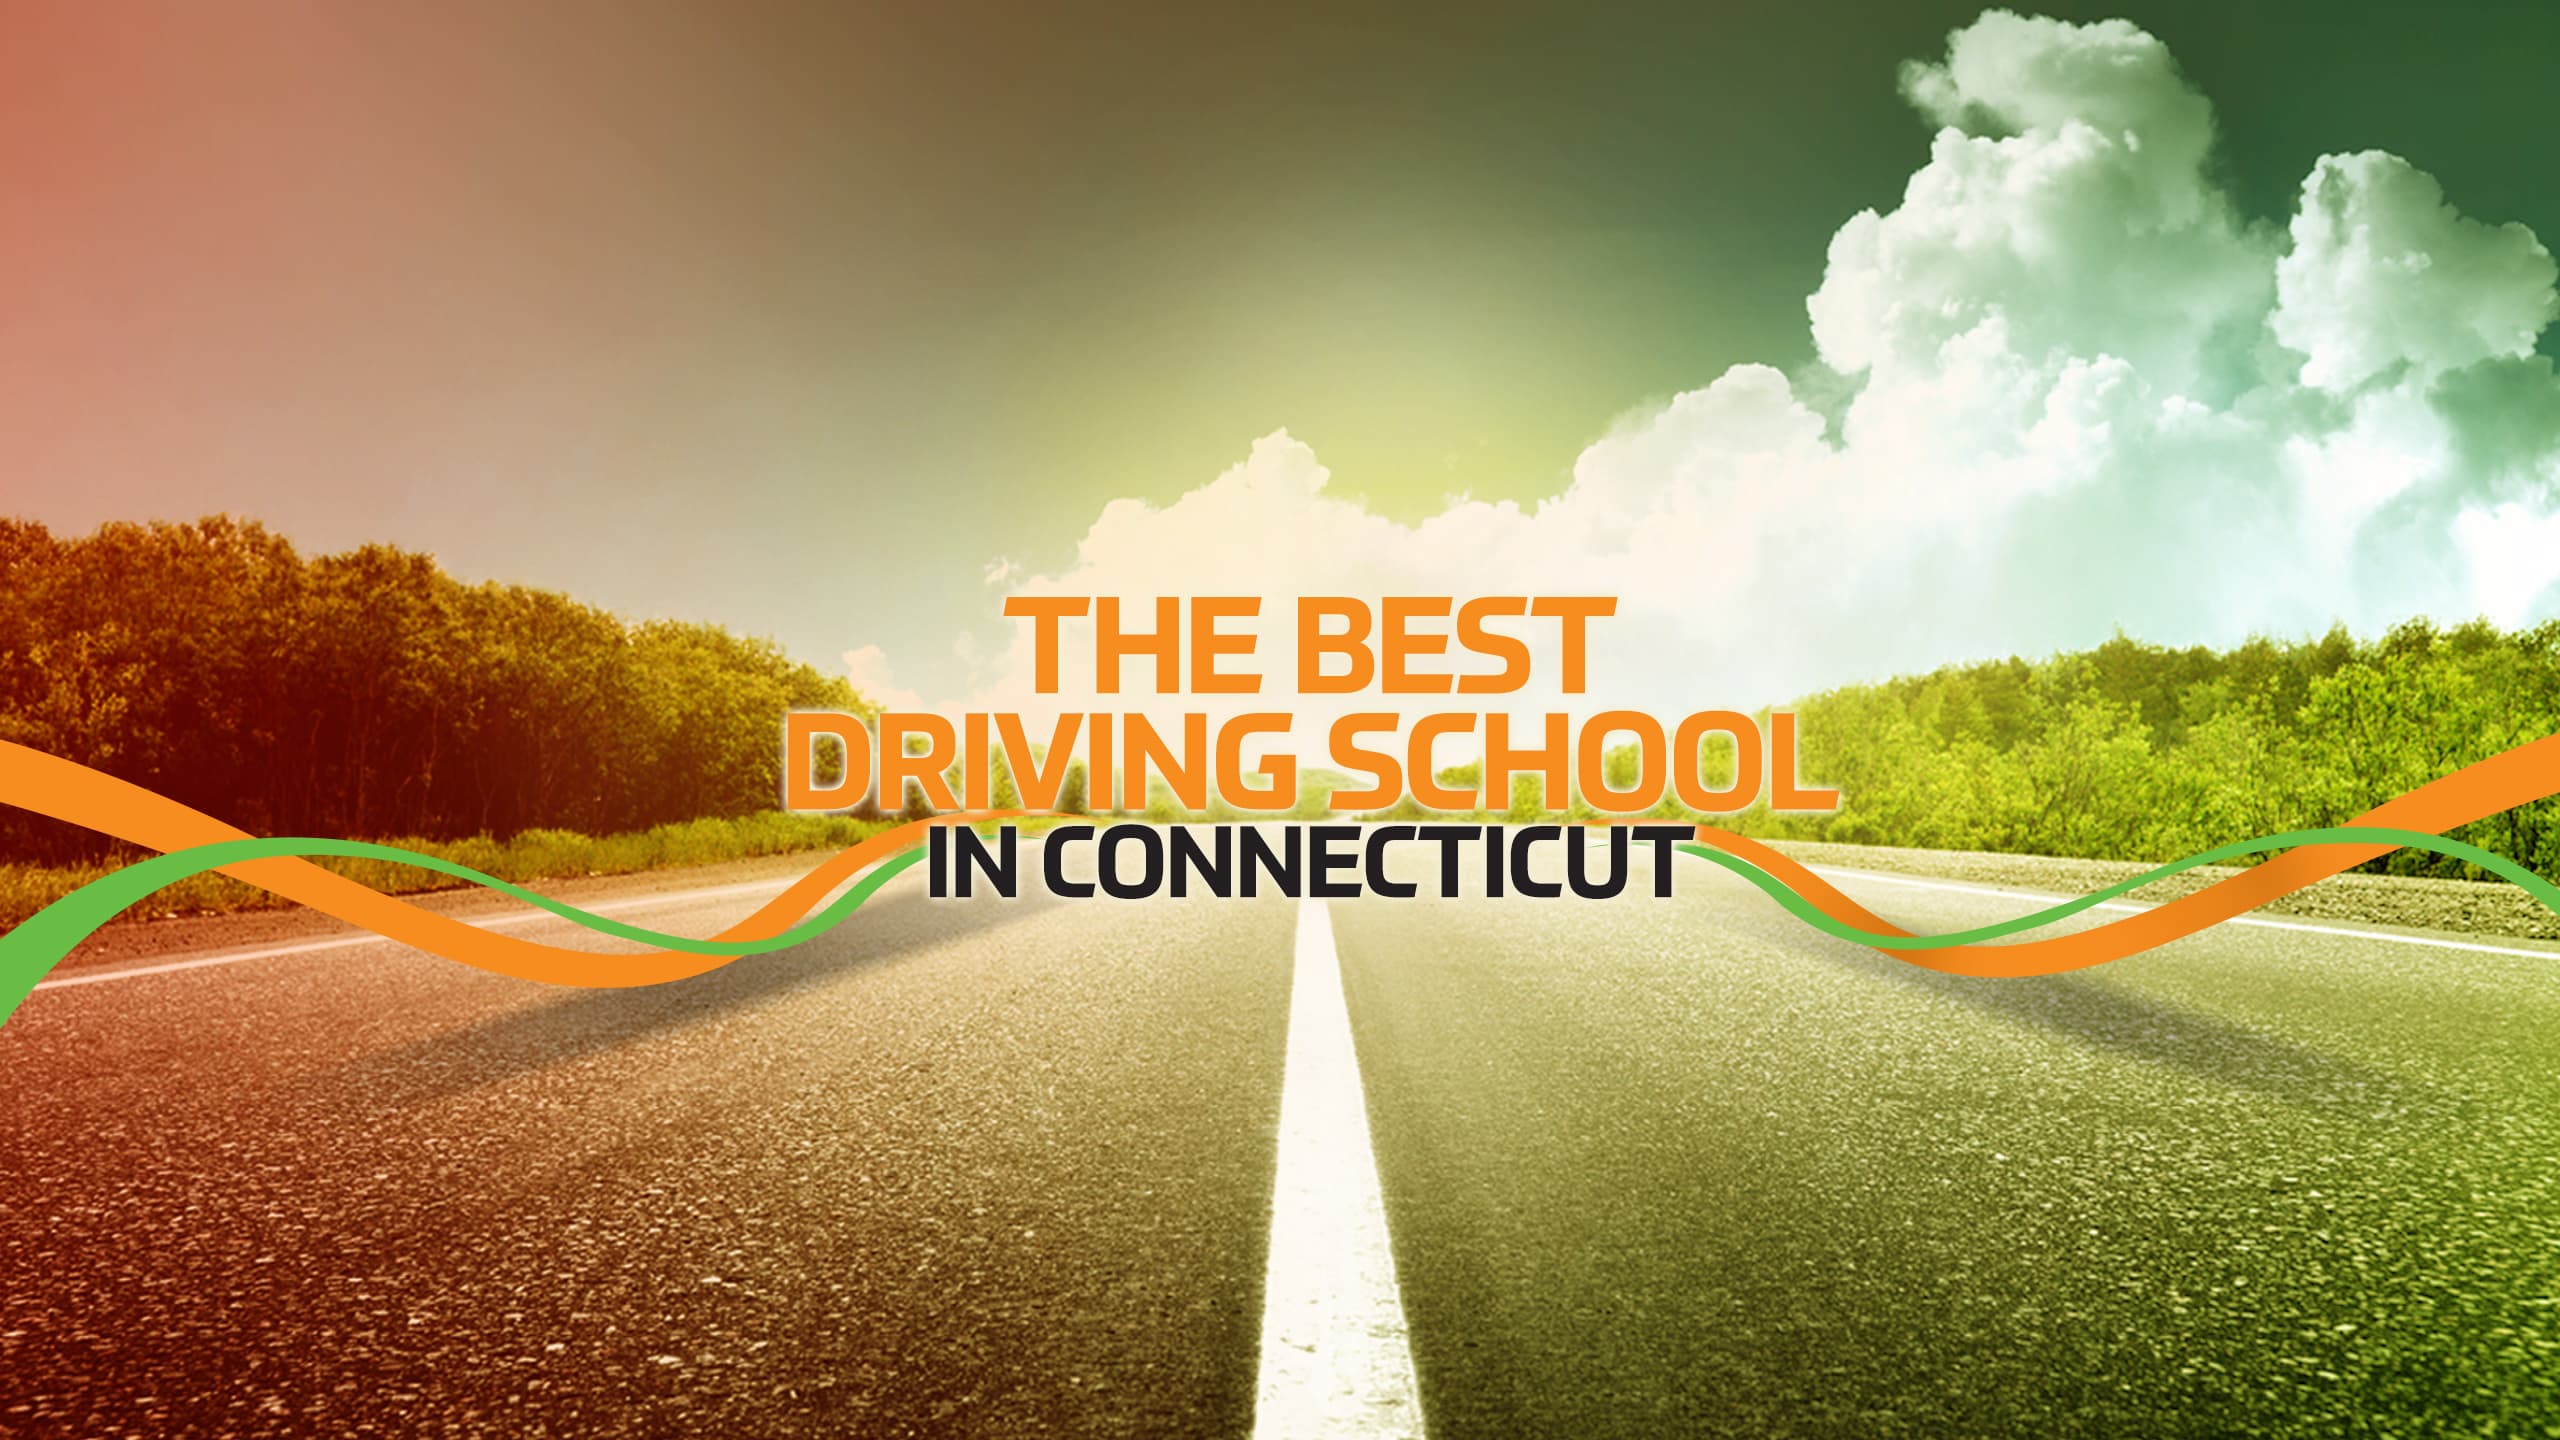 The Next Street - Stamford (CT 06902), US, driving school